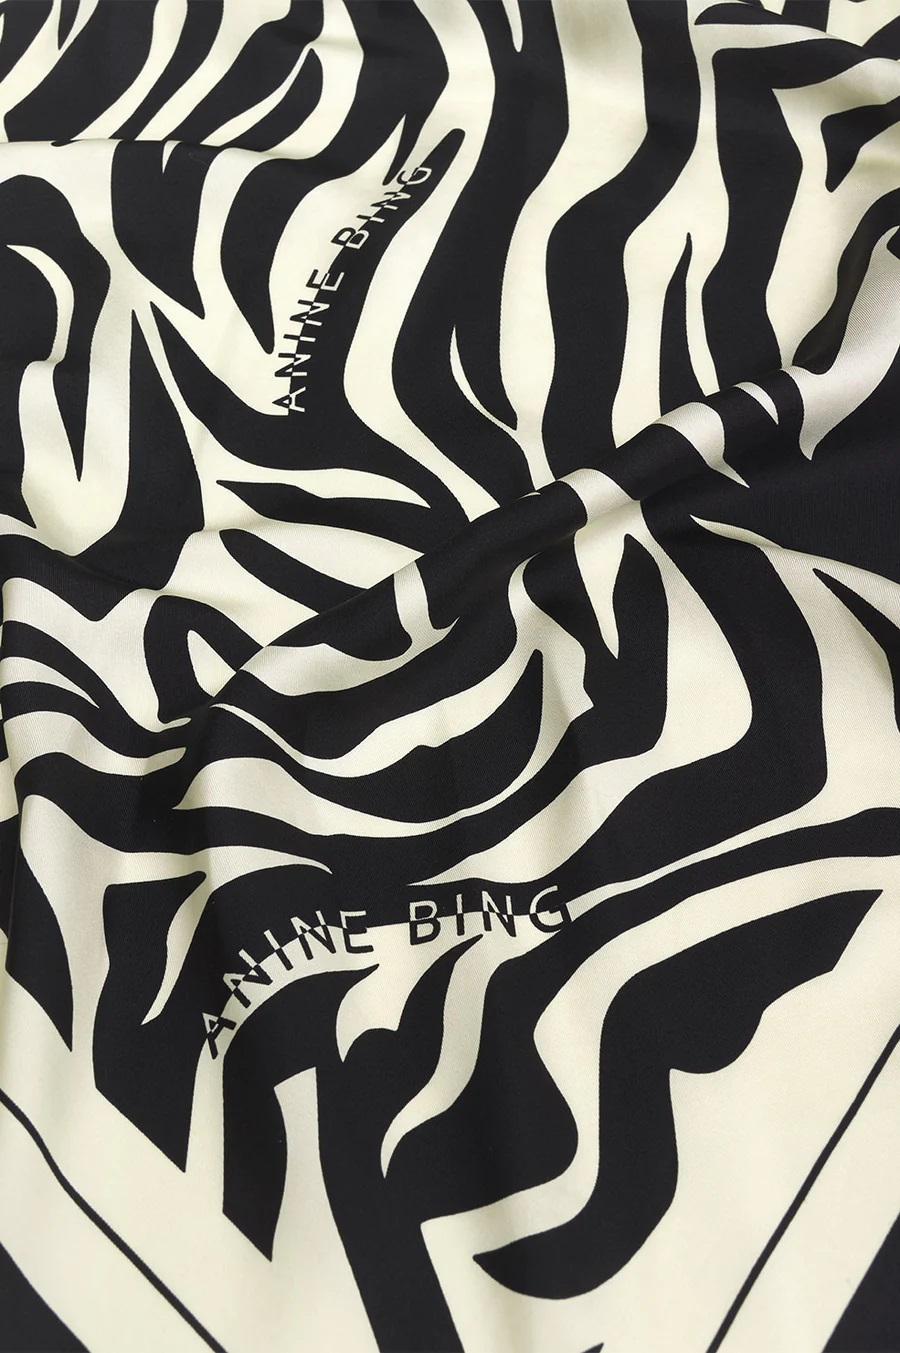 ANINE BING Evelyn Silk Scarf in Black/Cream Zebra